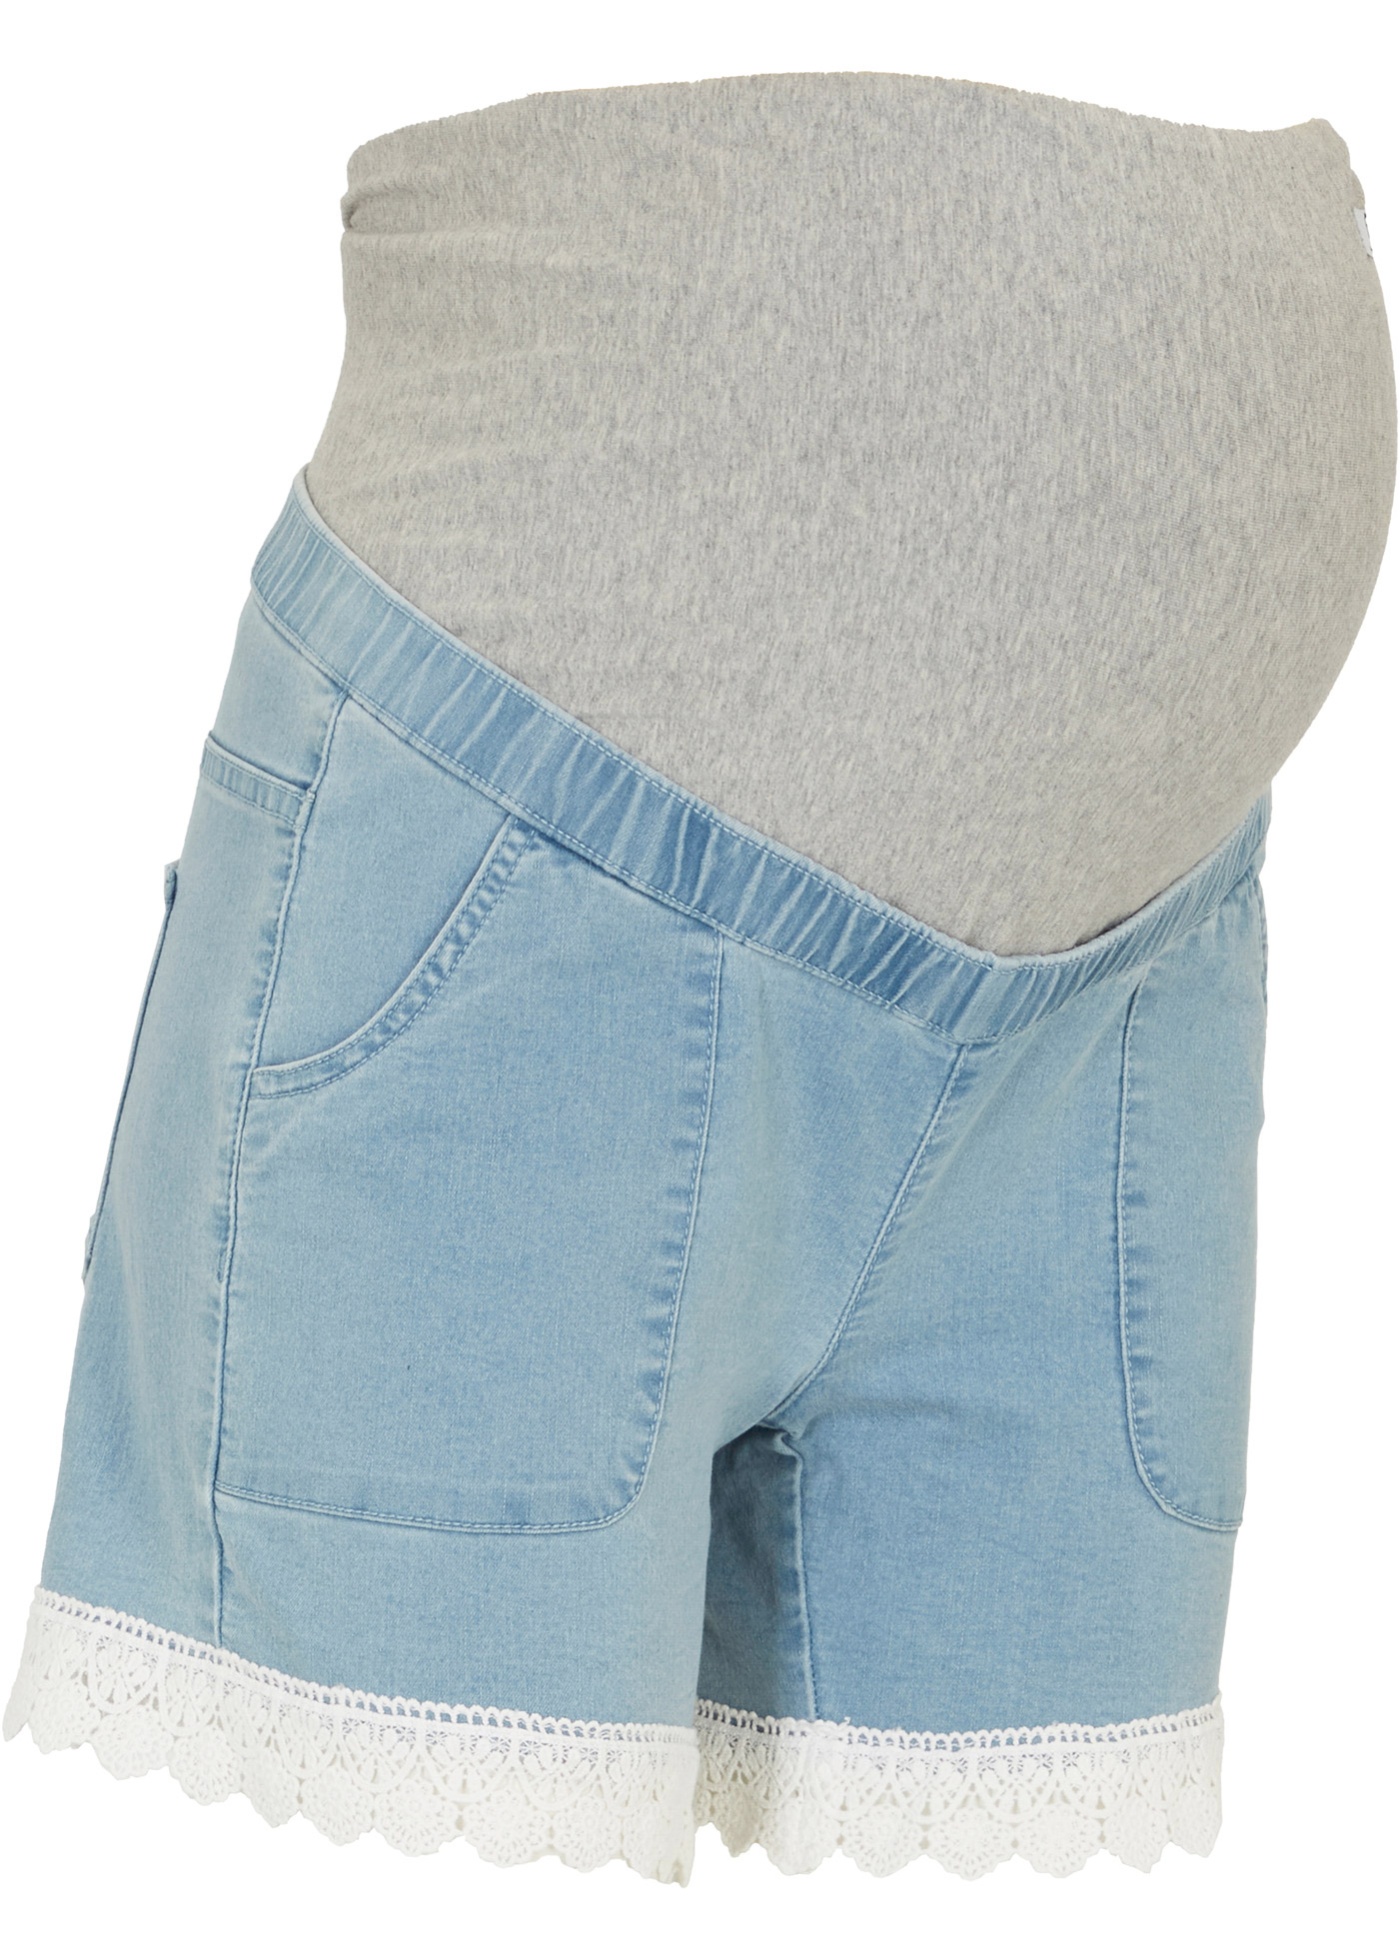 Zwangerschaps jeans short met kant